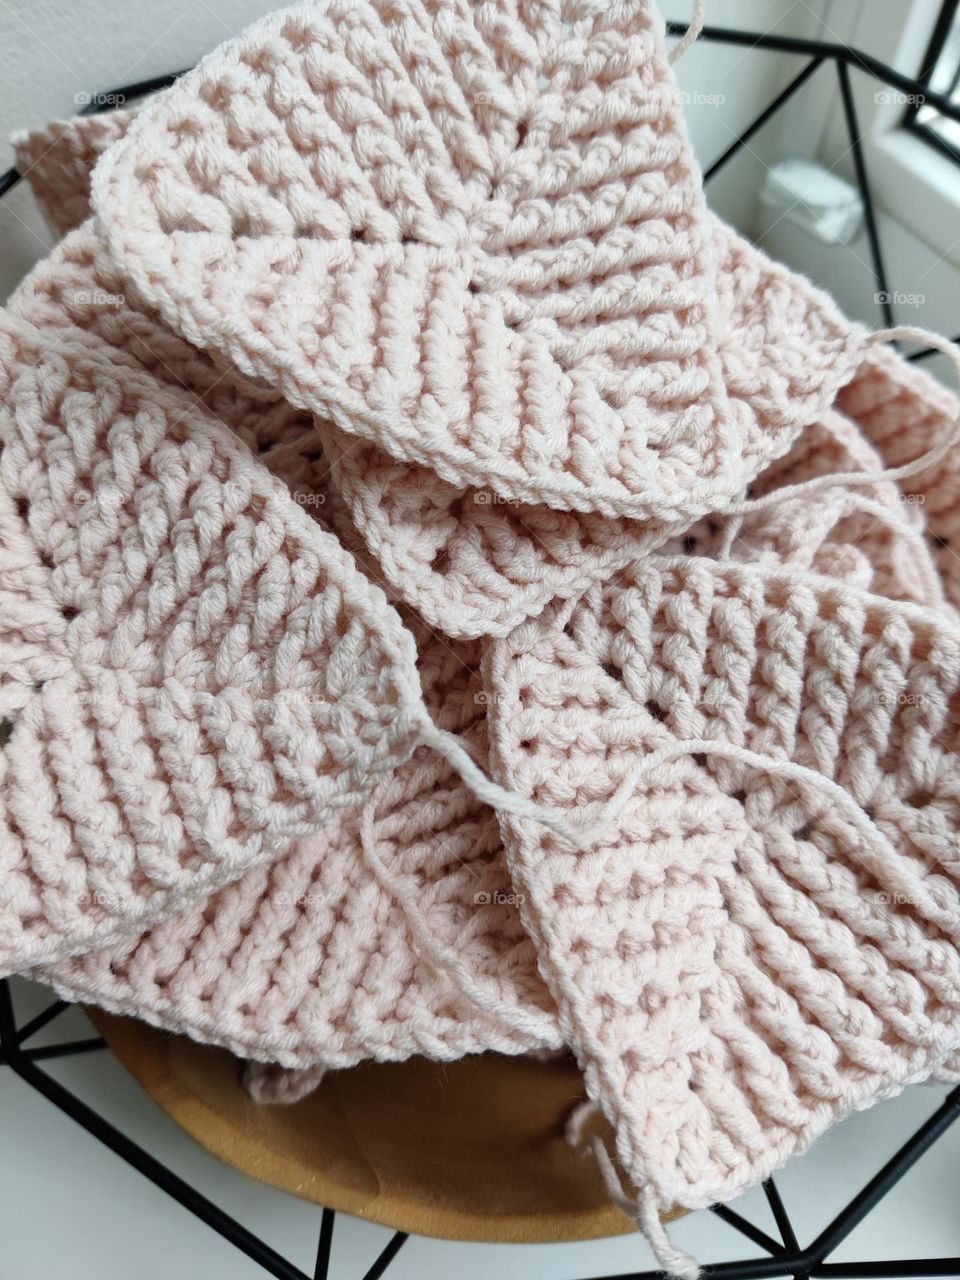 Patches of crochet blanket in progress